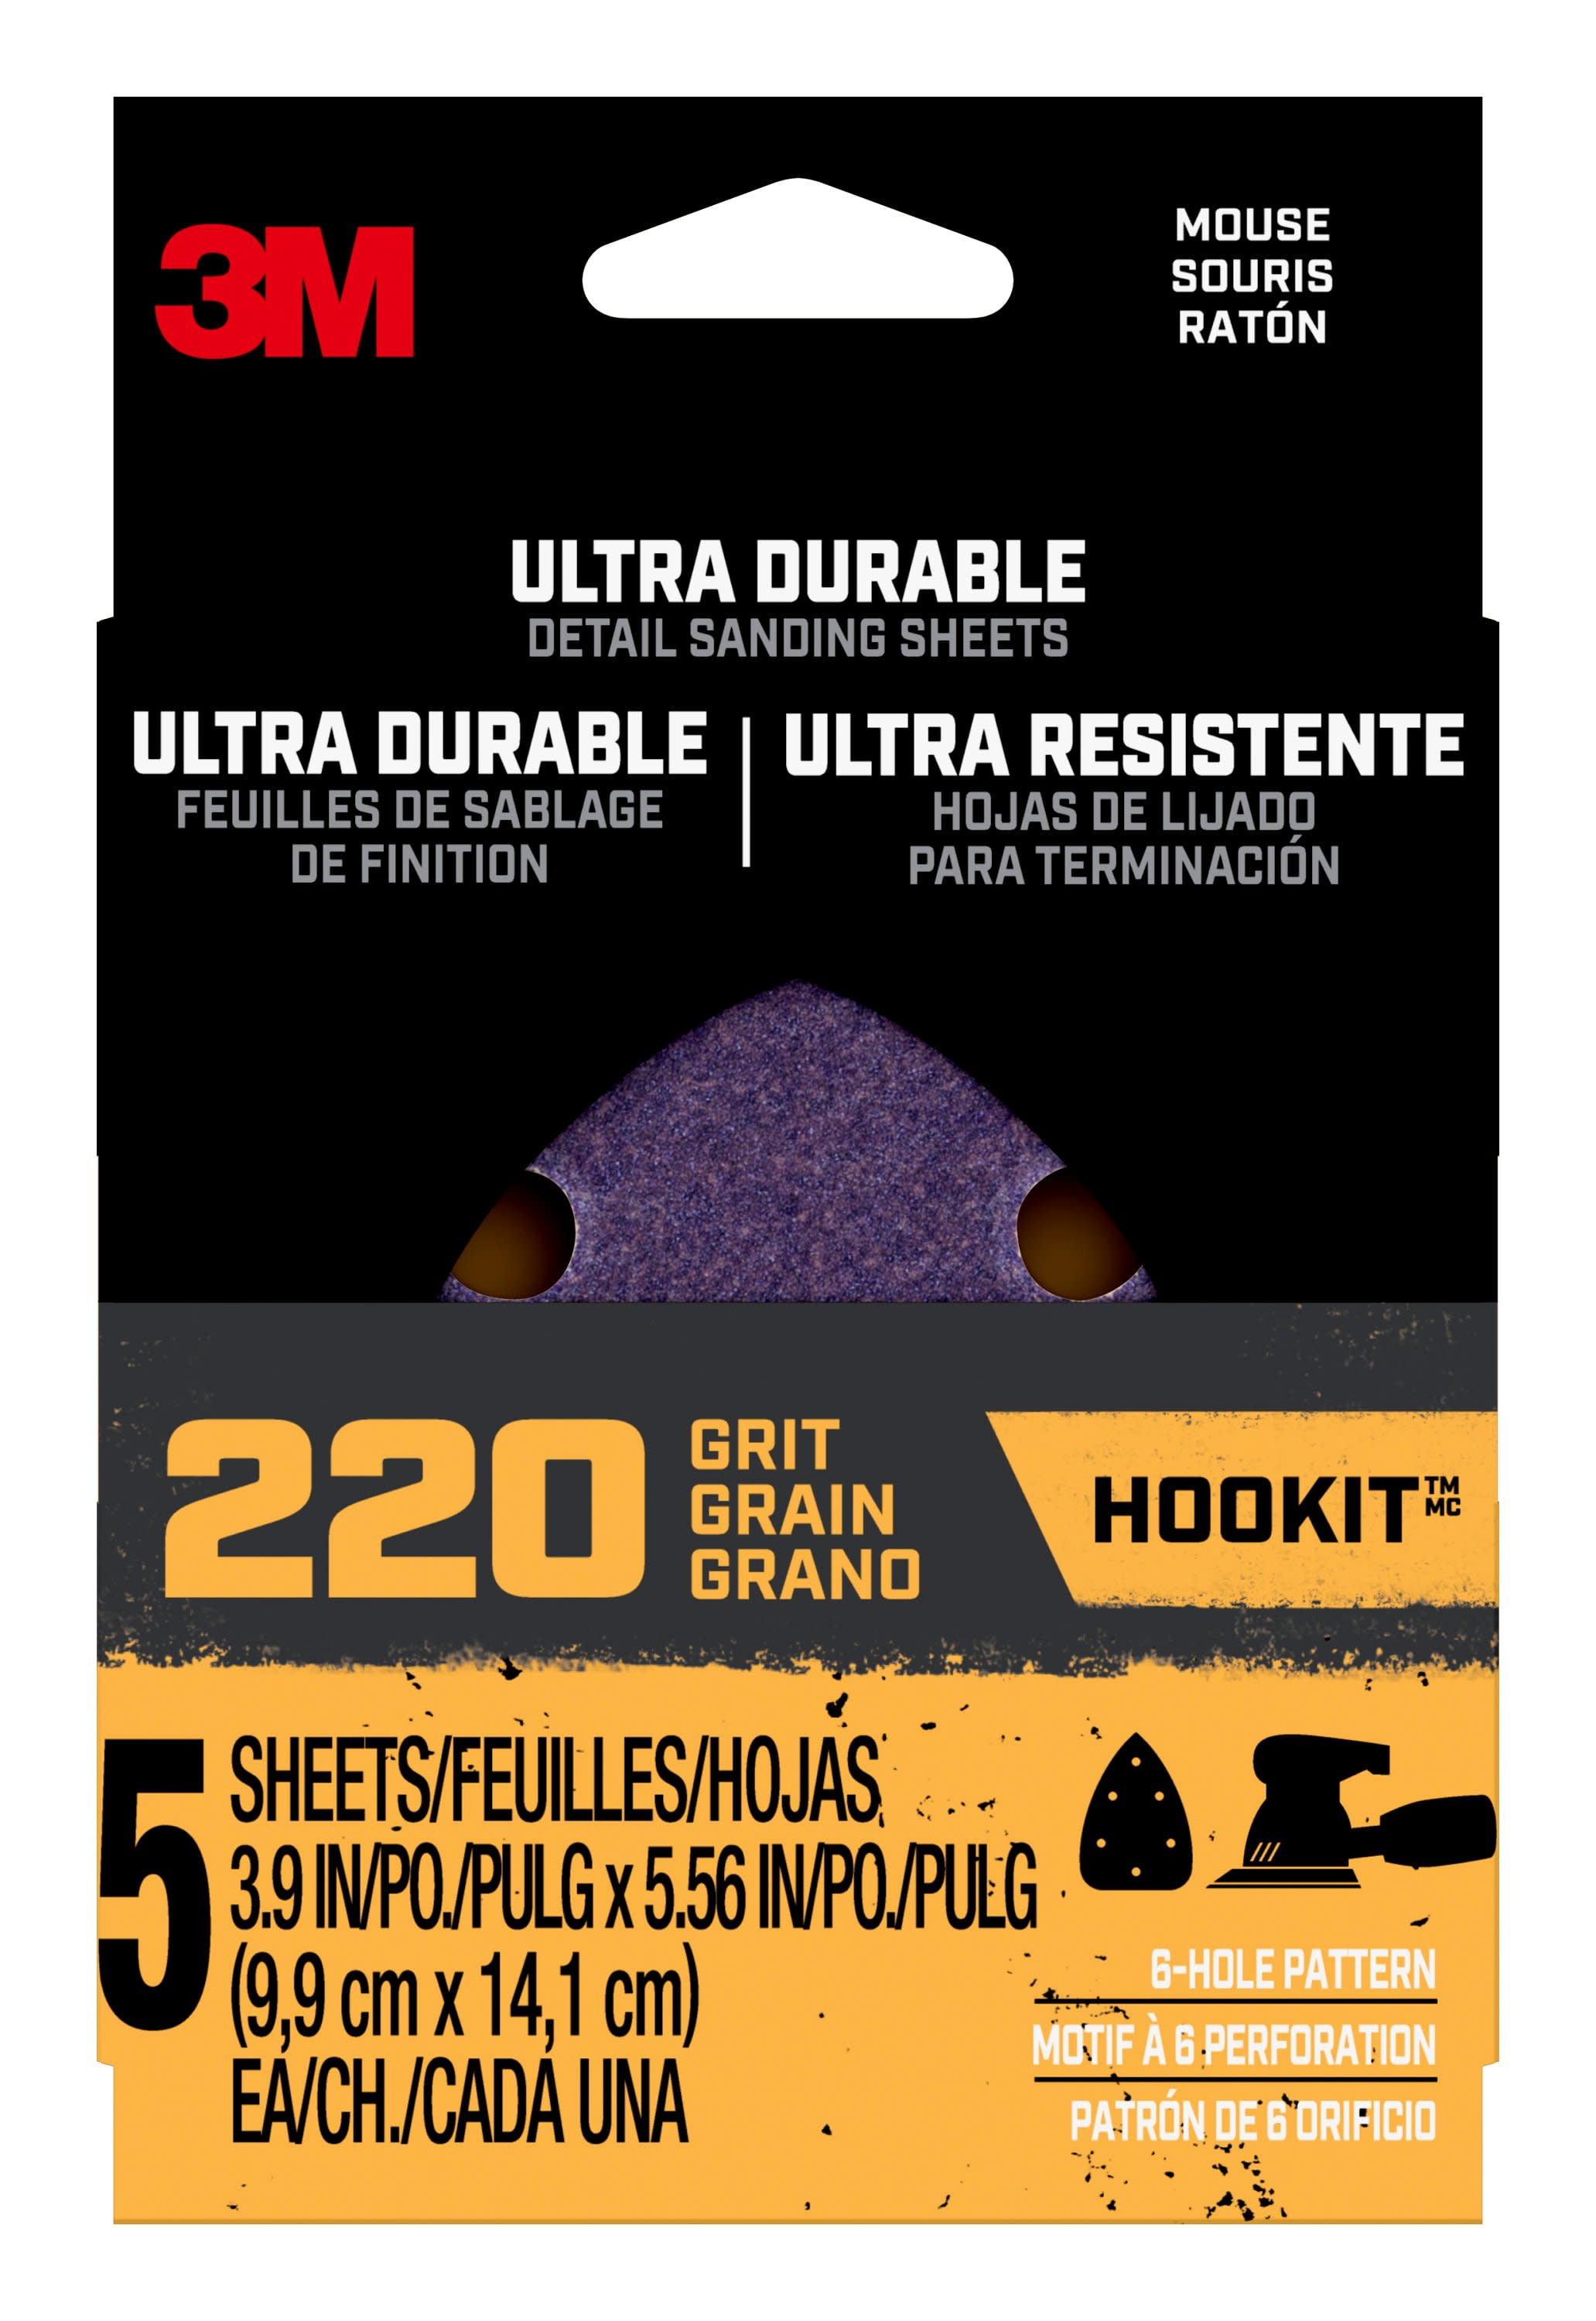 Mouse5pk220 220-grit Ultra Mouse Detail Sanding Sheet - Pack Of 5